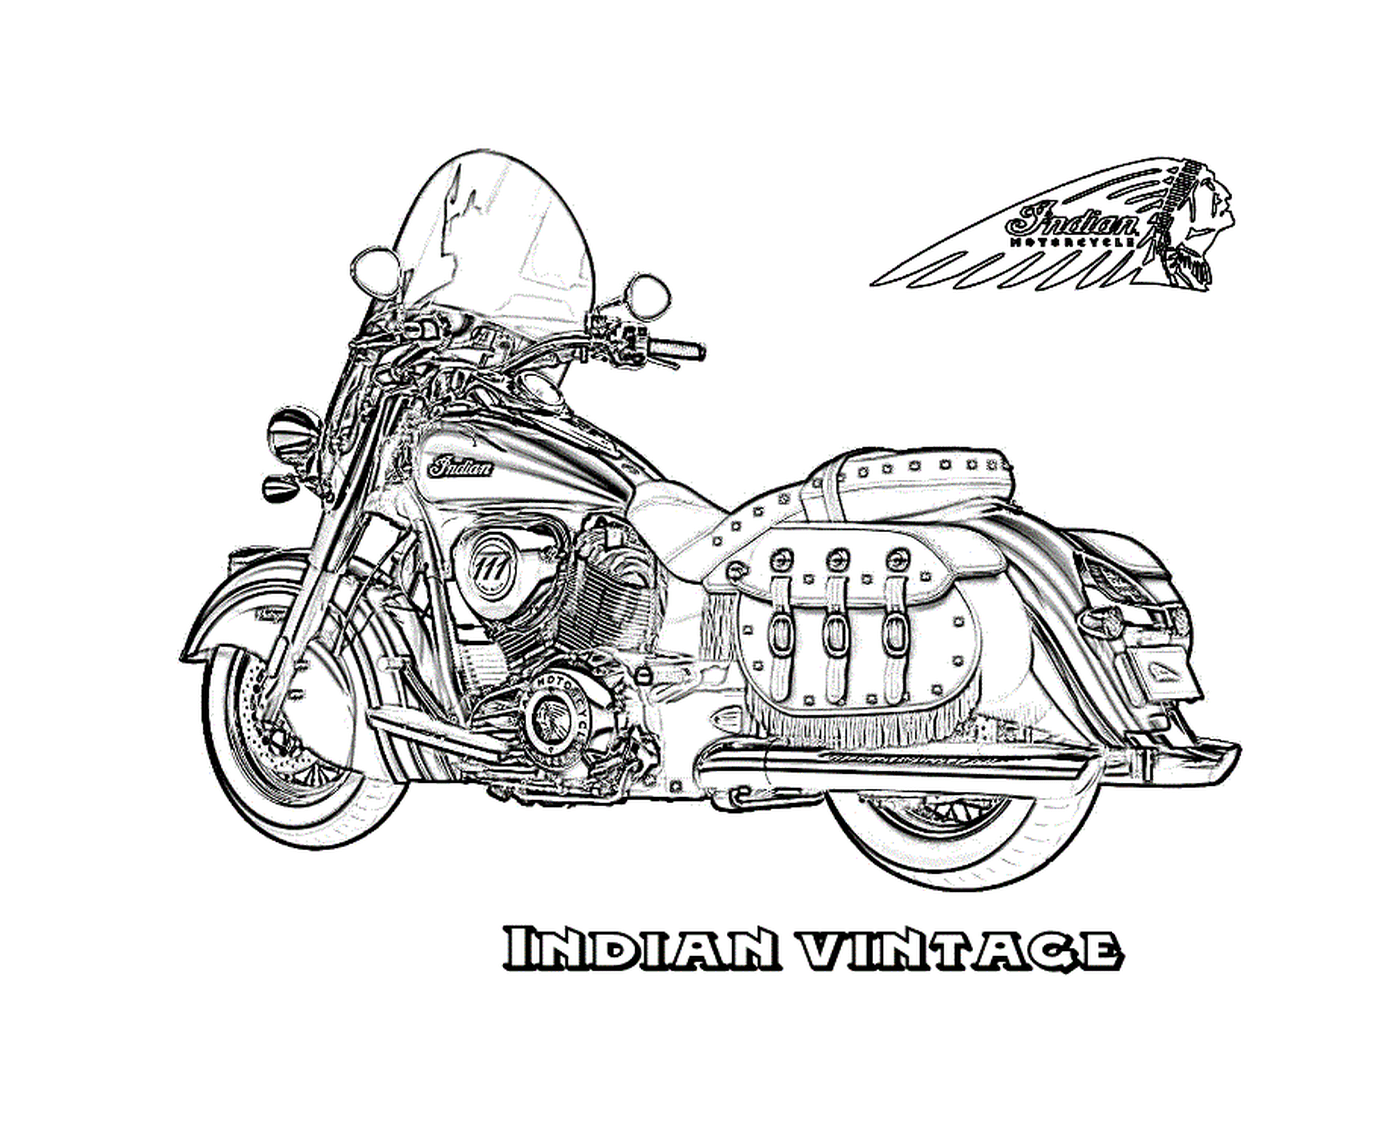  Moto indio vintage 